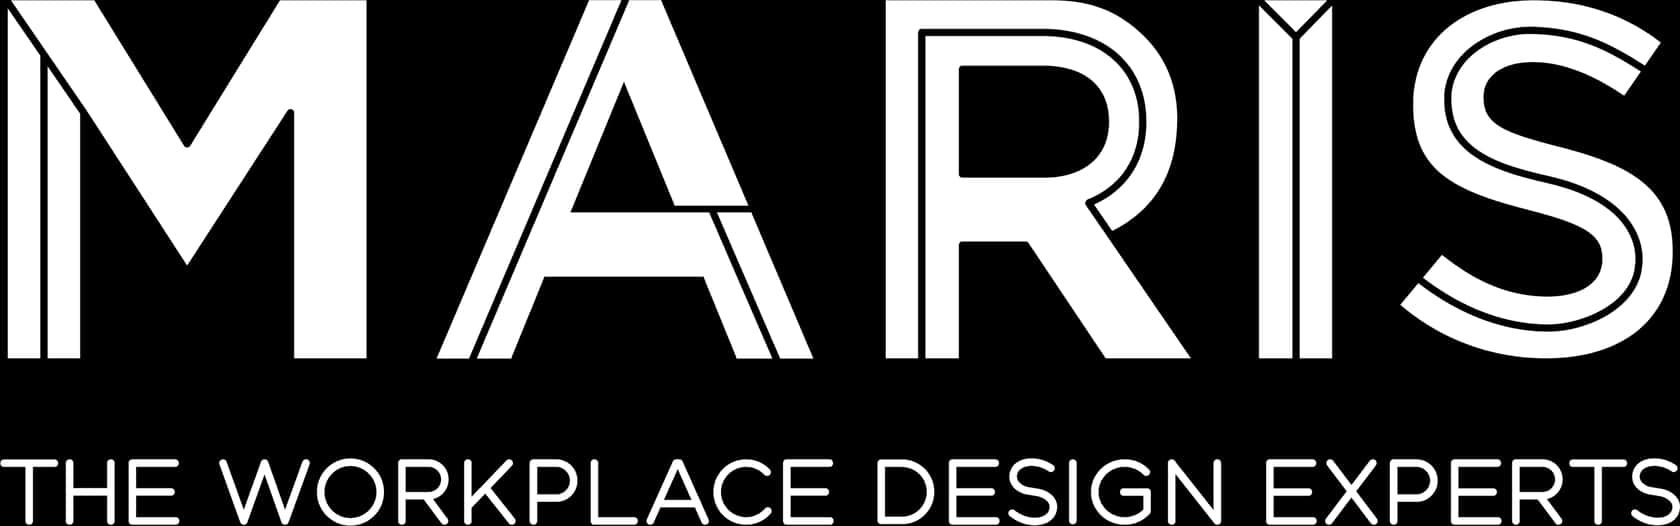 Maris Workplace Design Experts Logo PNG